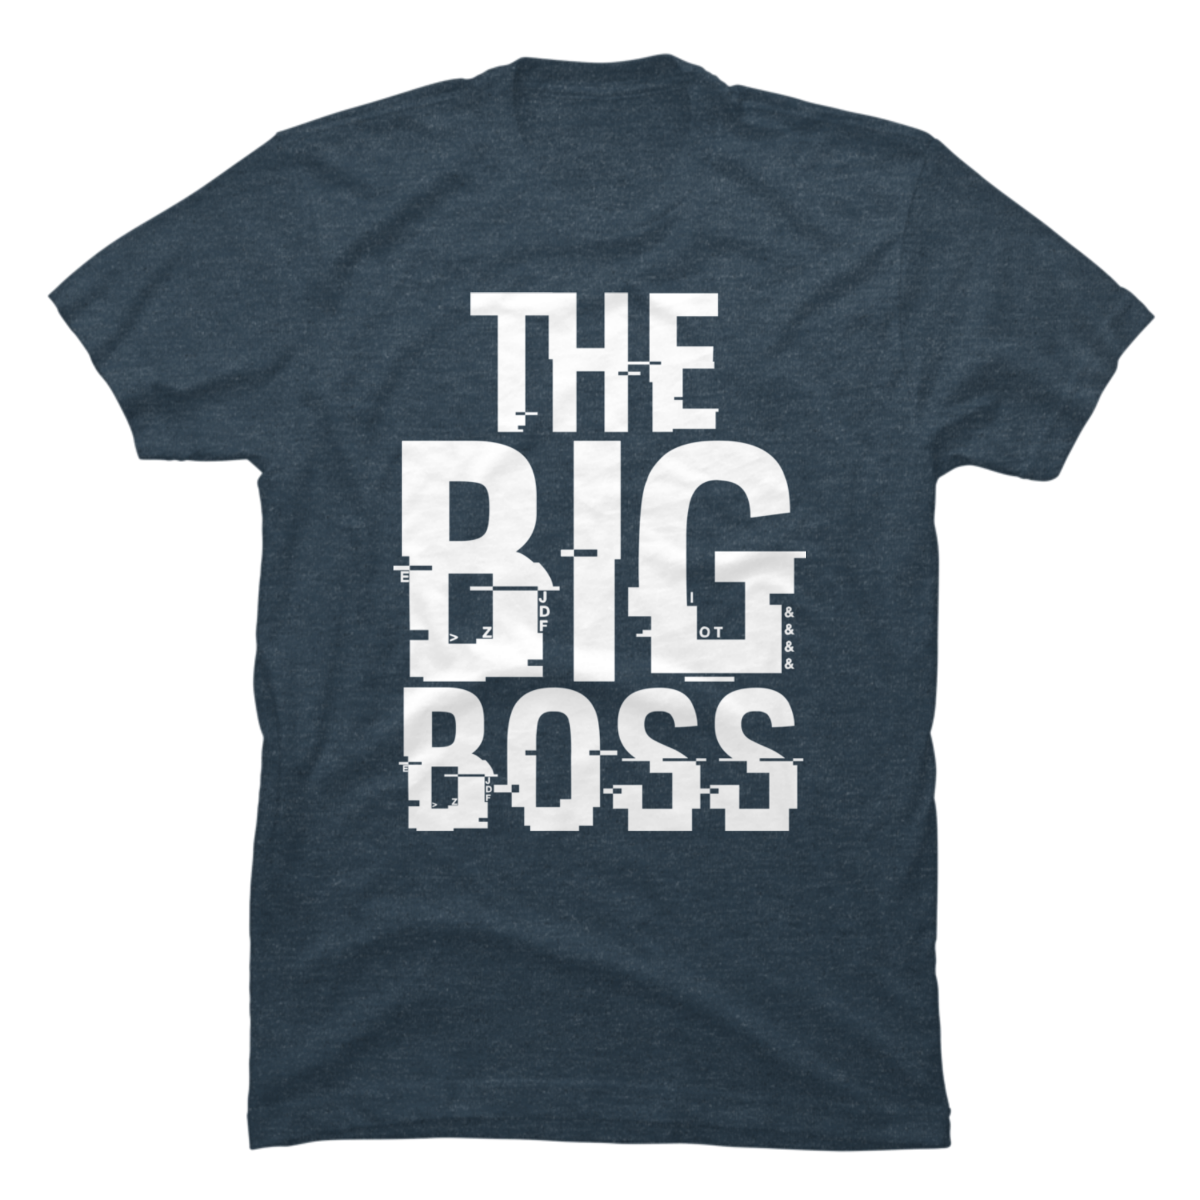 big boss t shirt